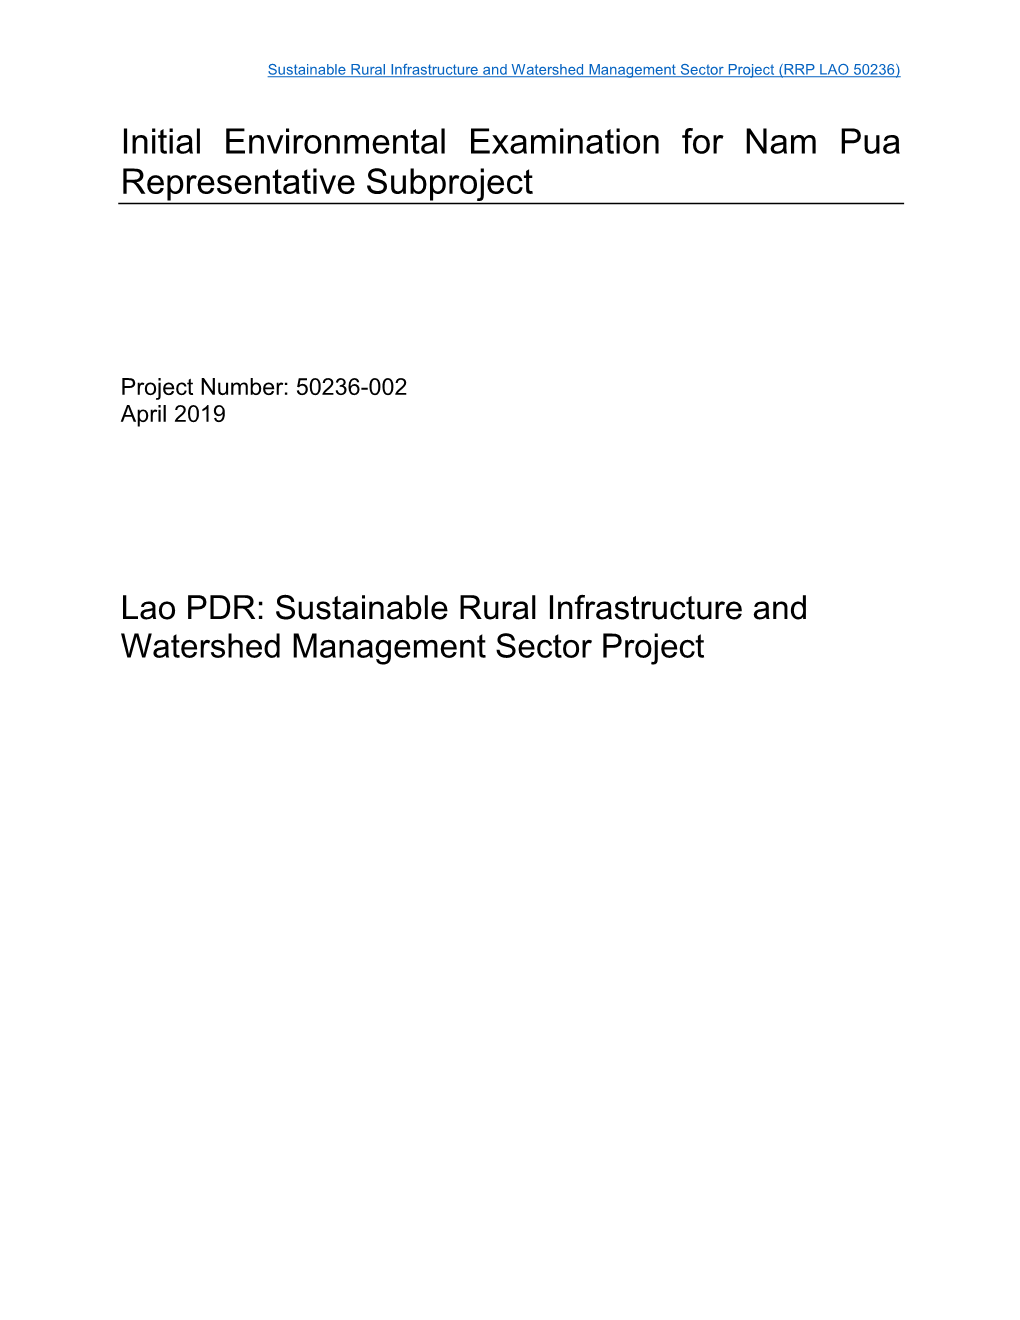 Initial Environmental Examination for Nam Pua Representative Subproject